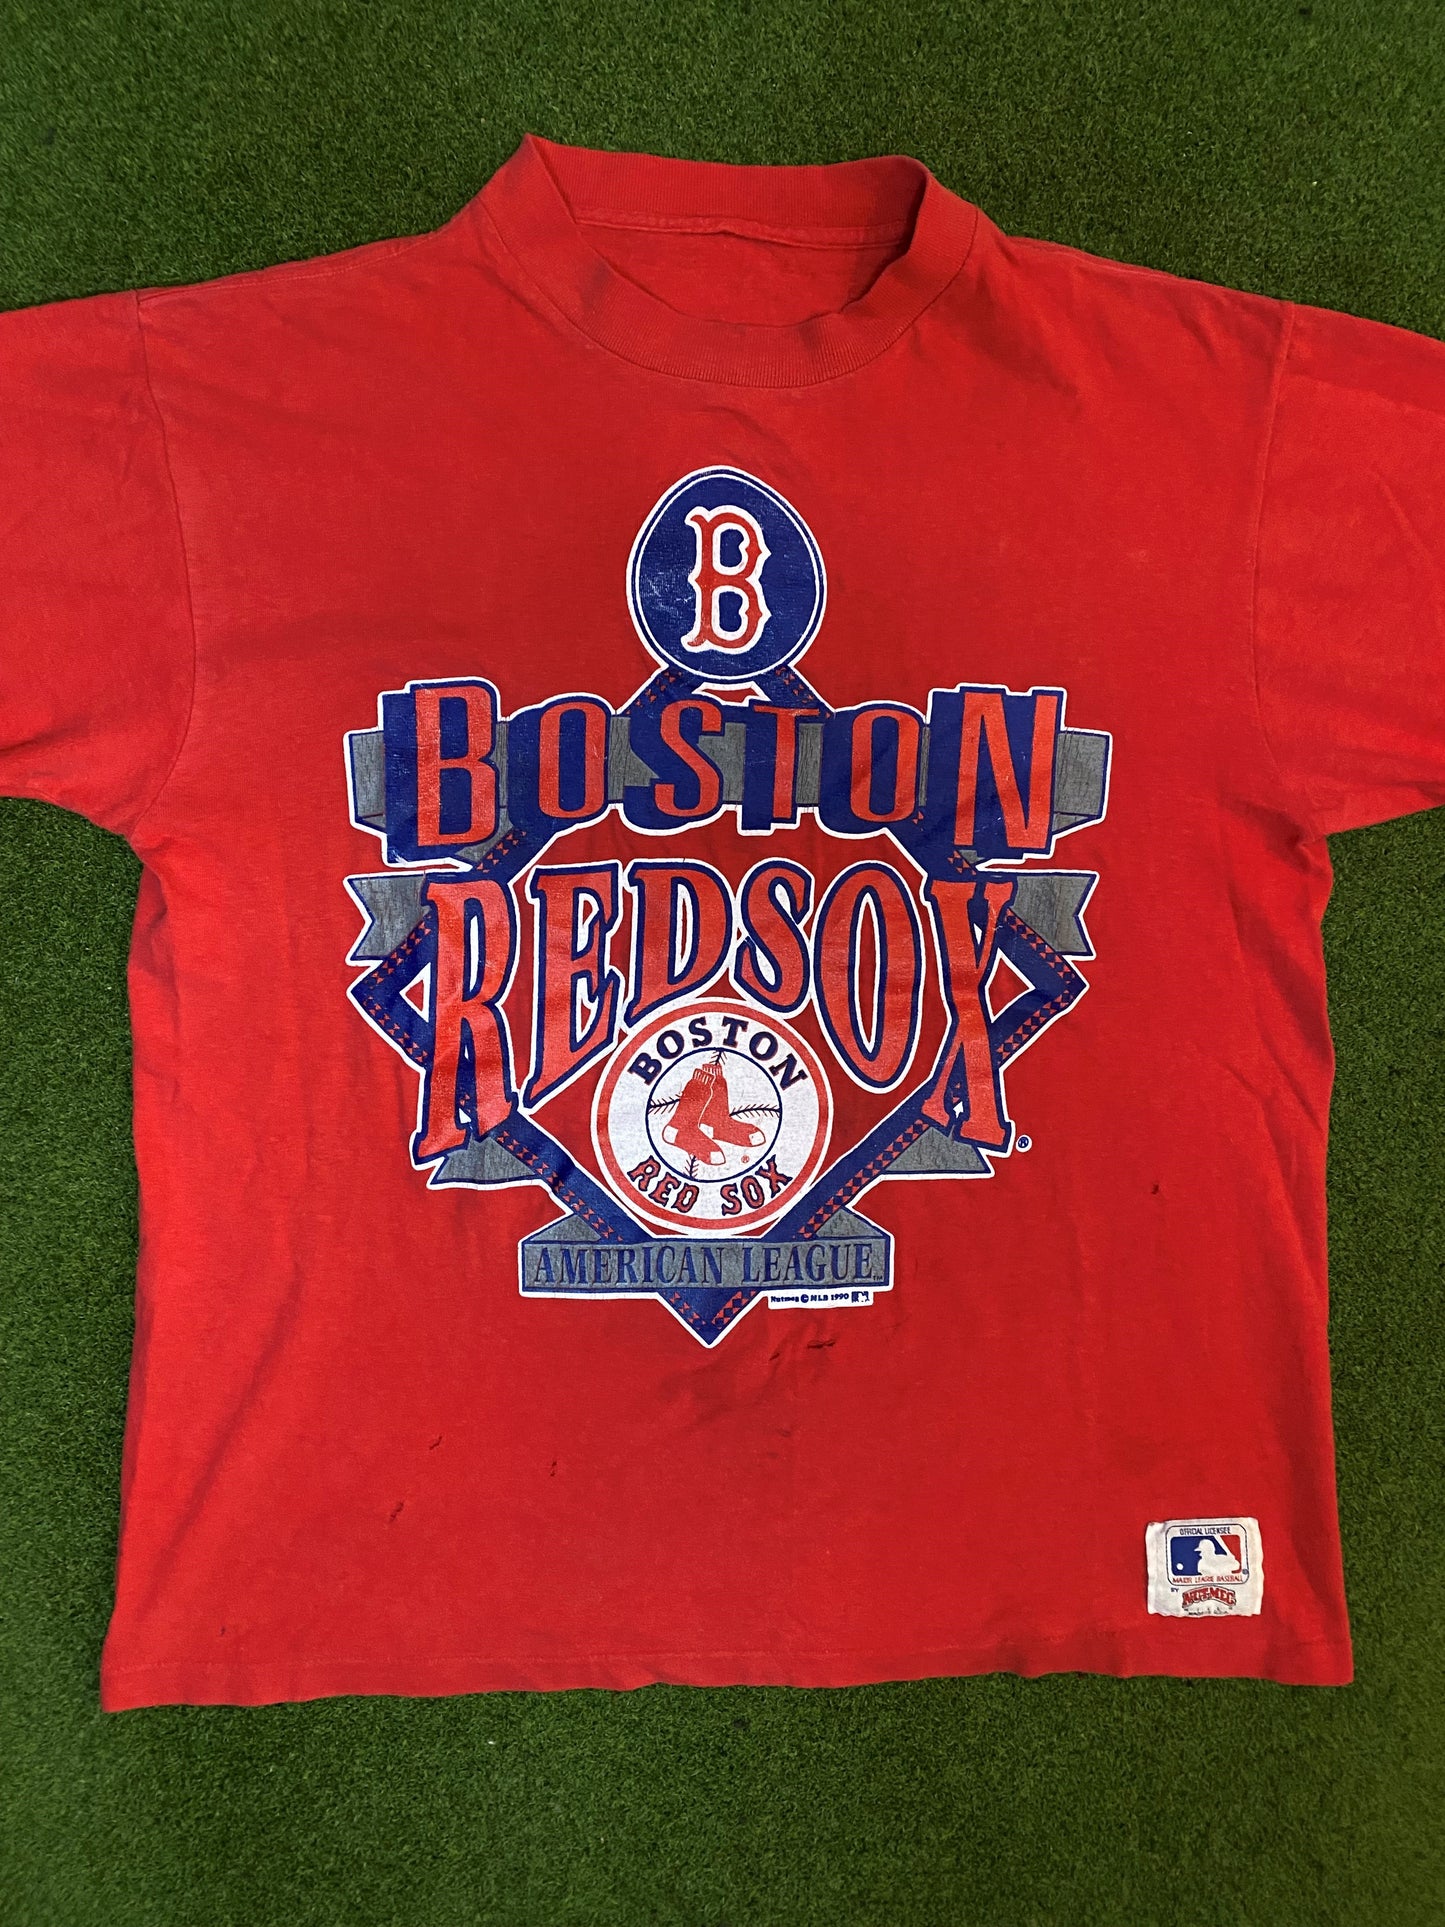 1990 Boston Red Sox - Vintage MLB T-Shirt (Large)